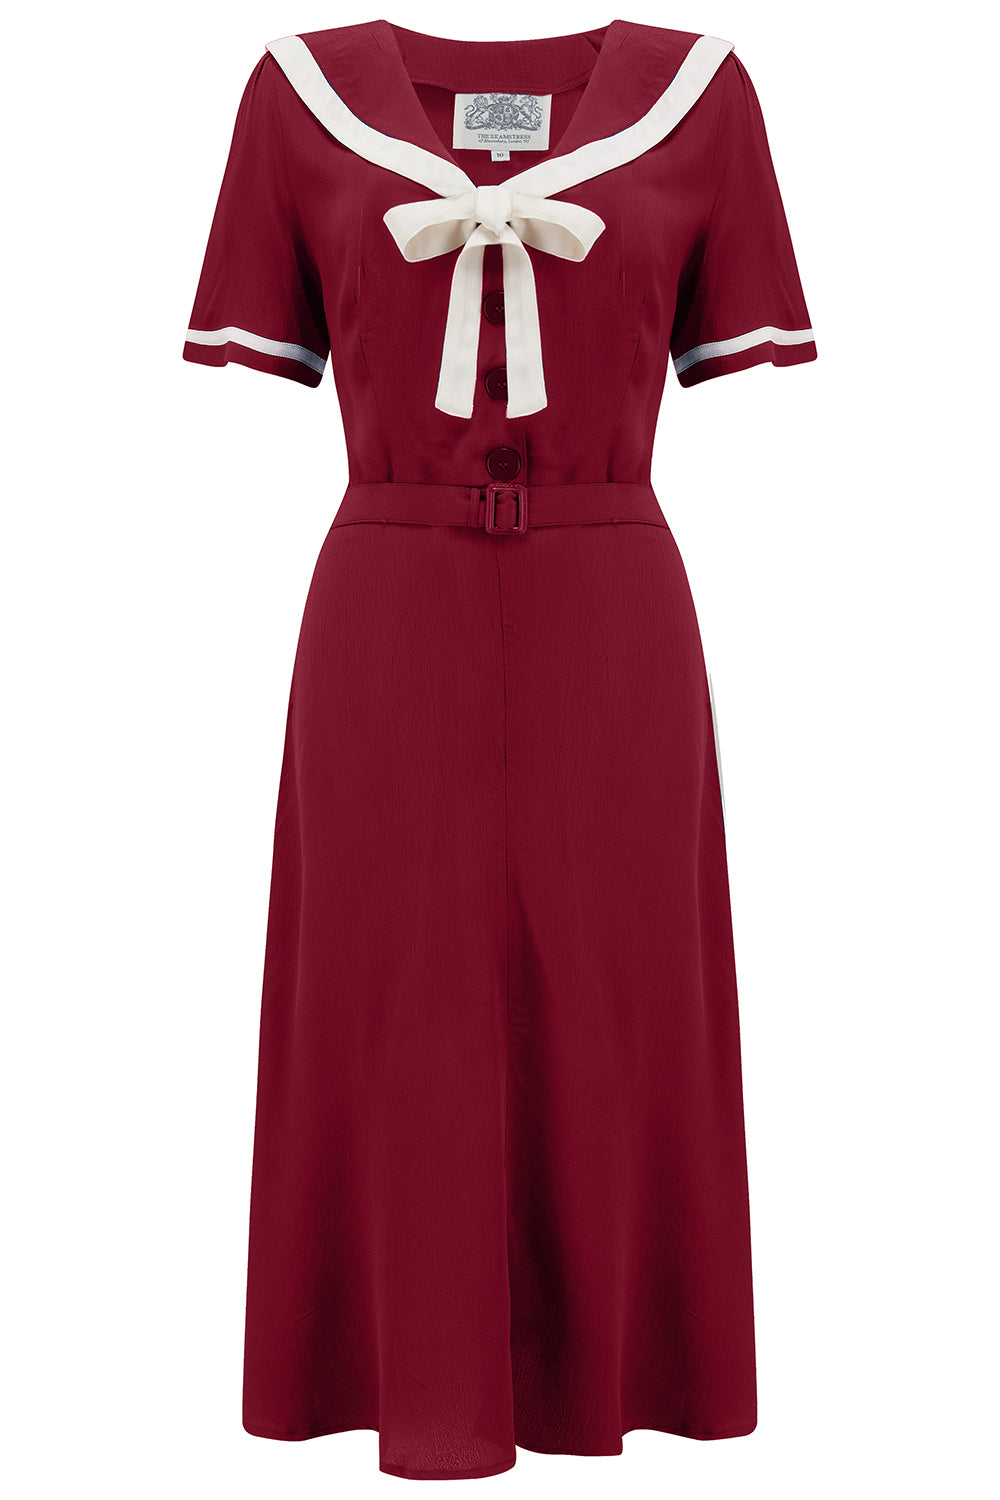 1940s Dresses | 40s Dress, Swing Dress, Tea Dresses Patti 1940s Nautical Sailor Dress in Wine Authentic true vintage style £79.00 AT vintagedancer.com